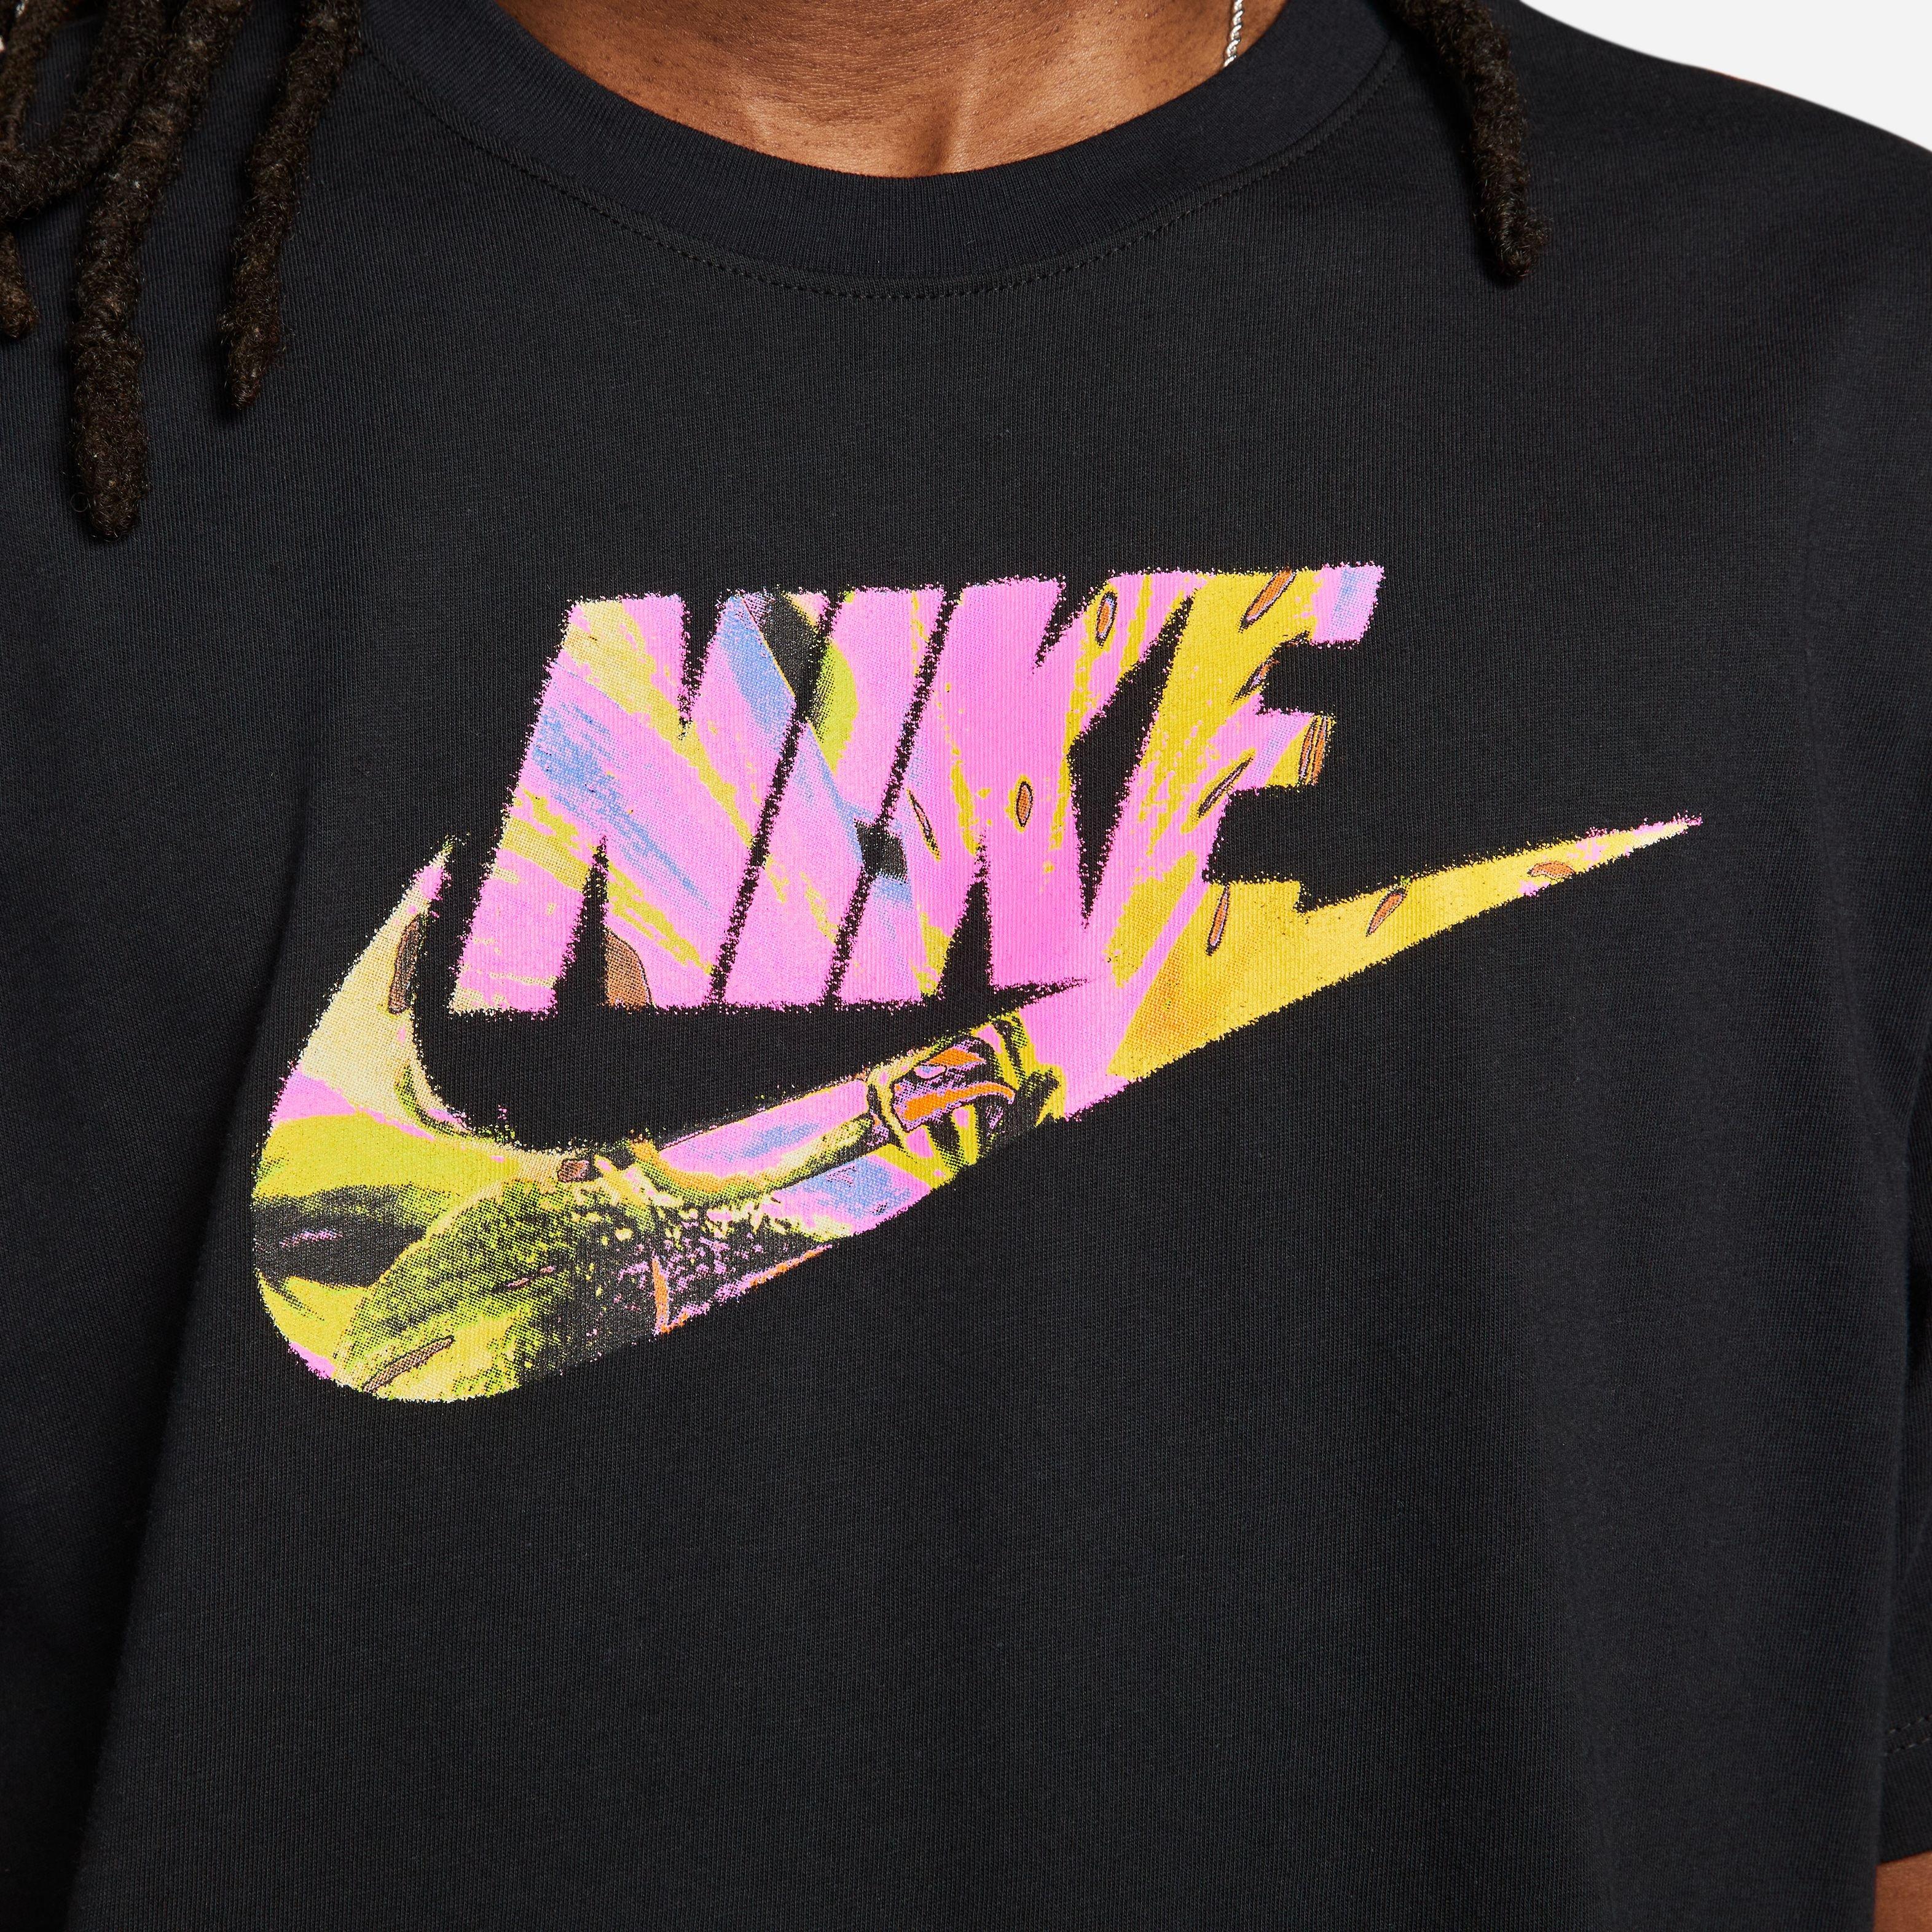 Nike Multi Futura graphic t-shirt in black